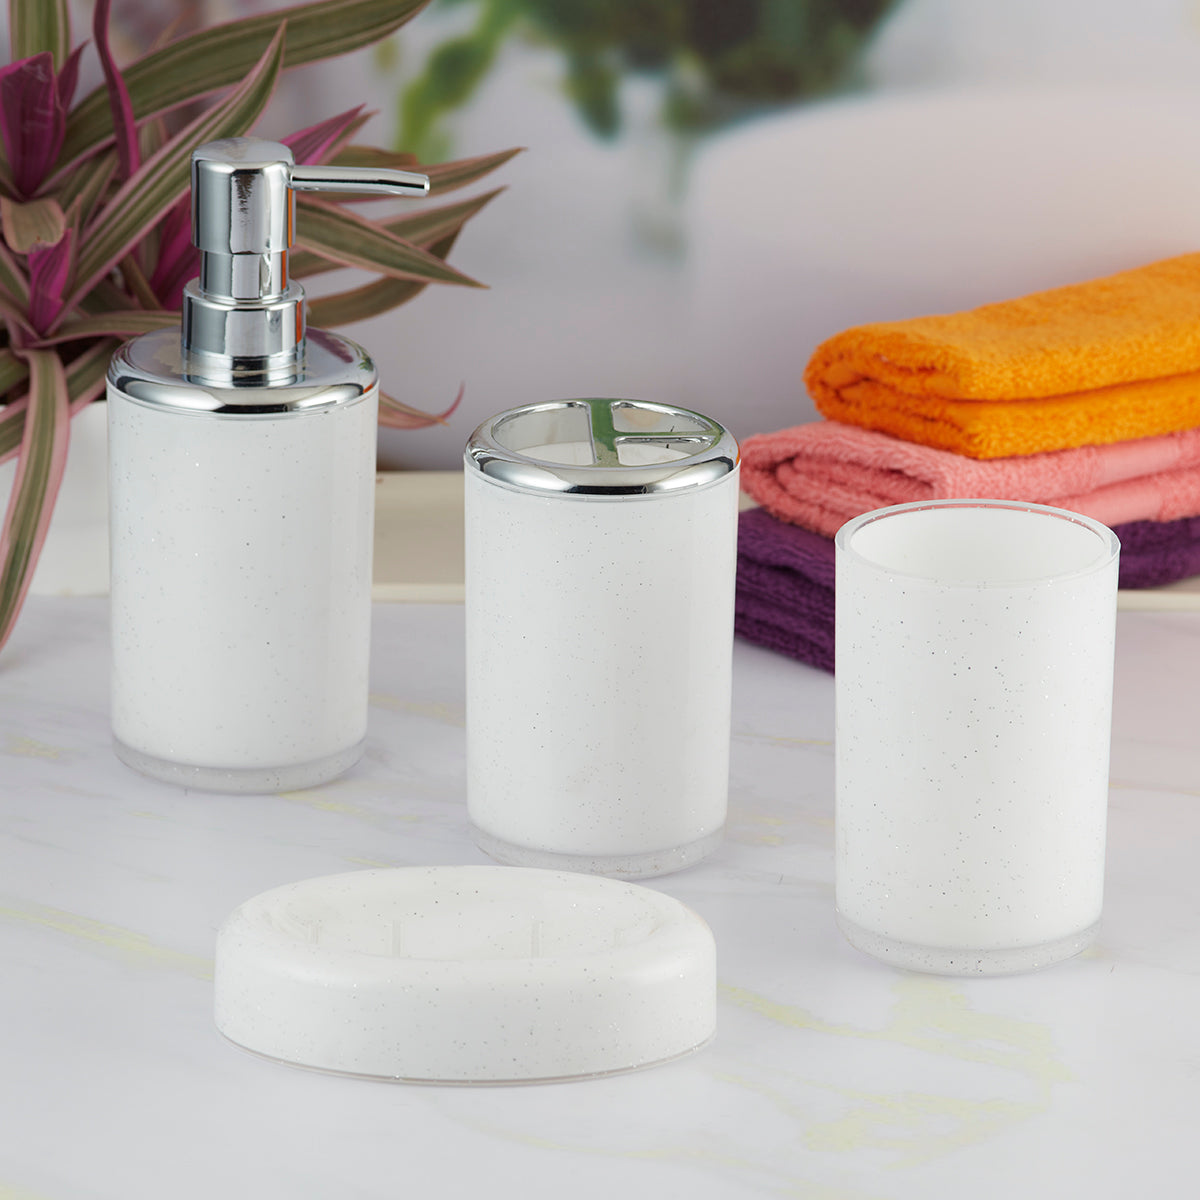 Acrylic Bathroom Accessories Set of 4 Bath Set with Soap Dispenser (10048)